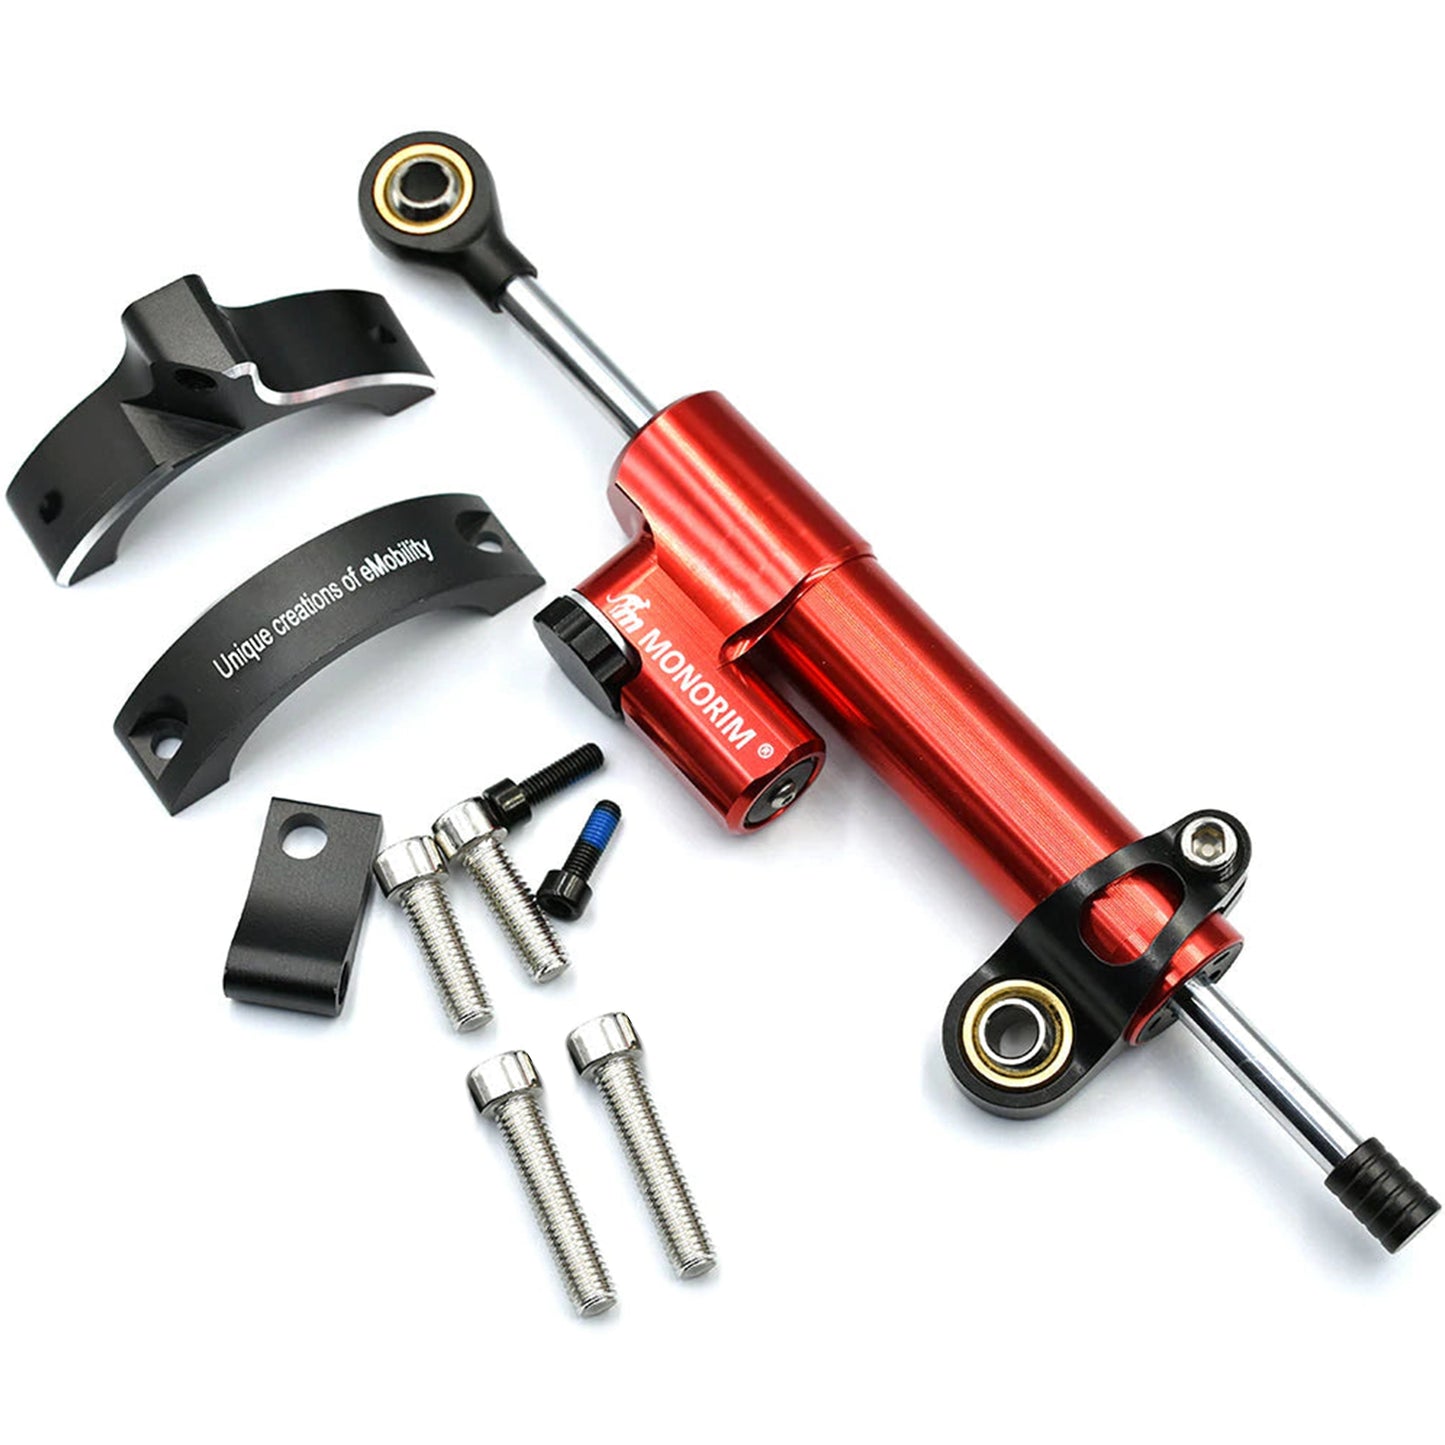 Monorim Steering Damping, Damper for Hiboy ks4 pro Scooter, High-speed Stabilizer